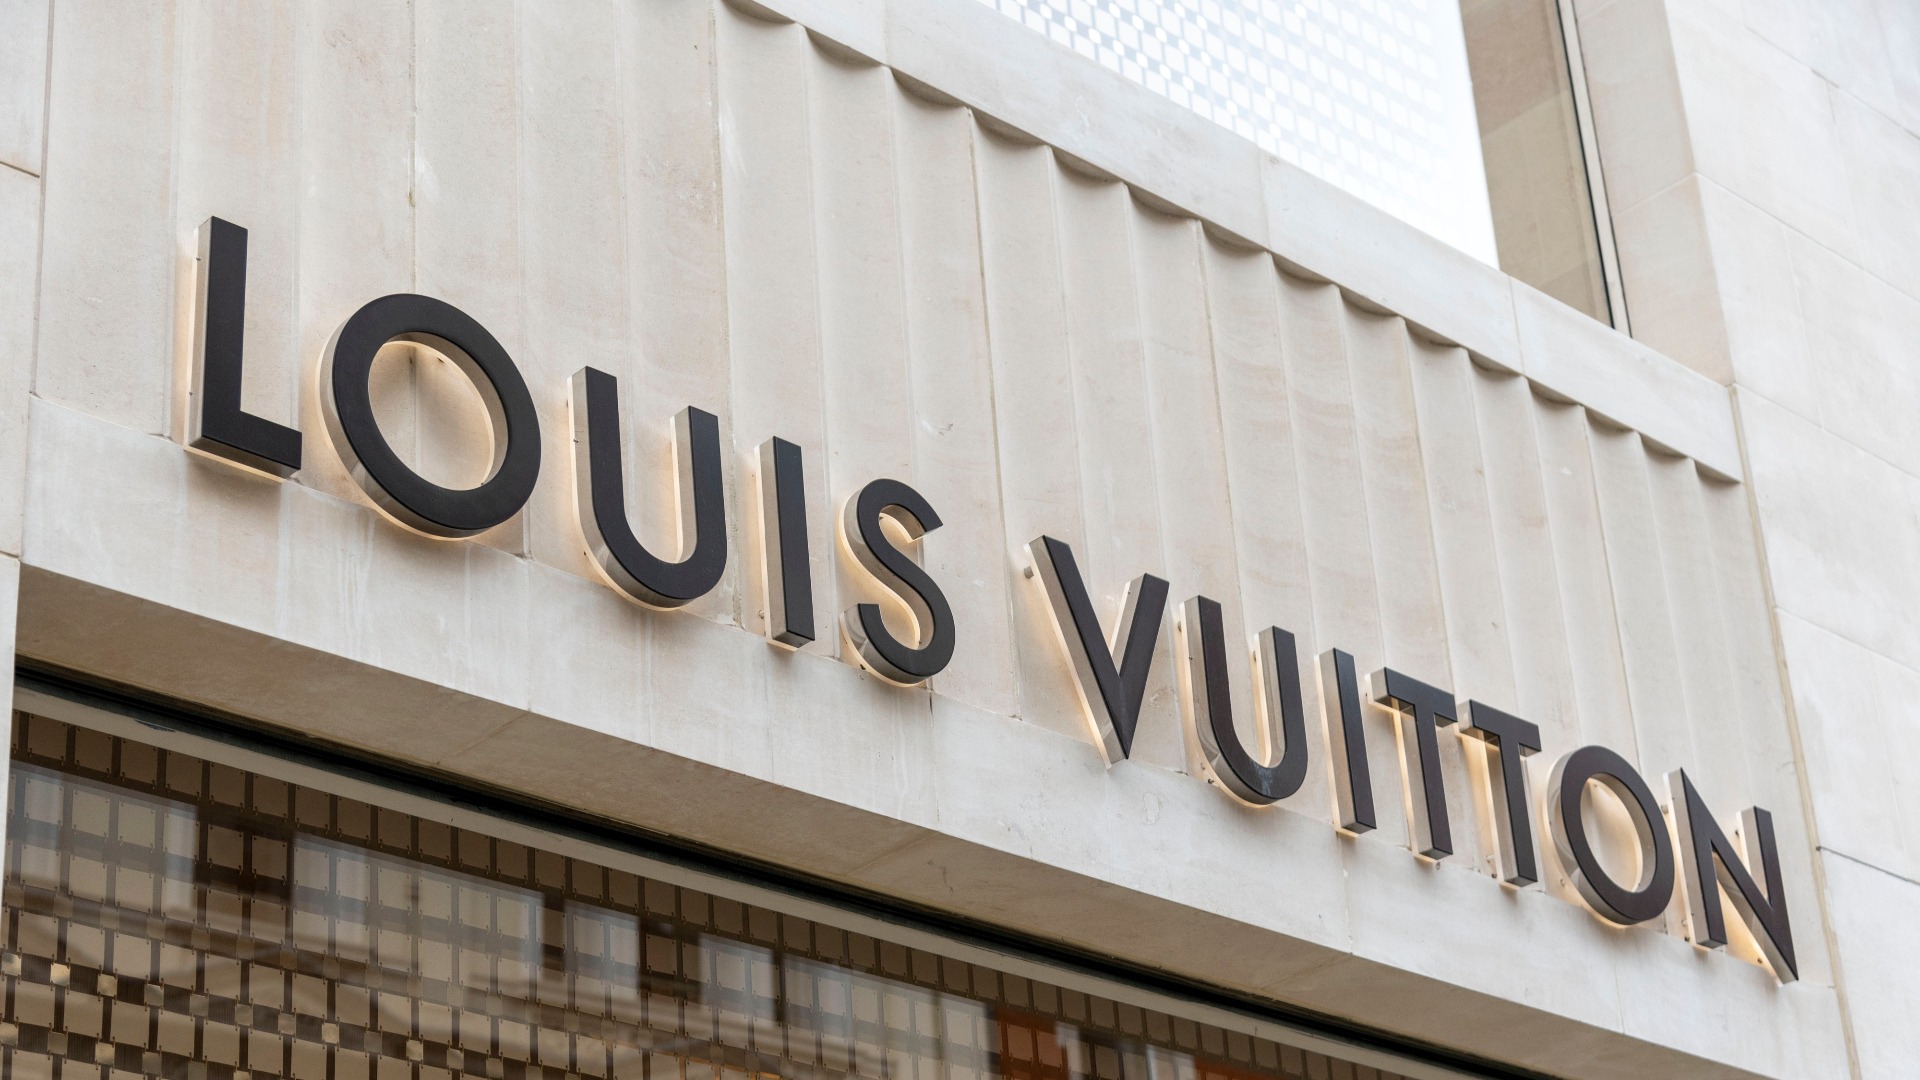 Louis Vuitton Shanghai Store Sees $22 Million in August Sales: Sources – WWD